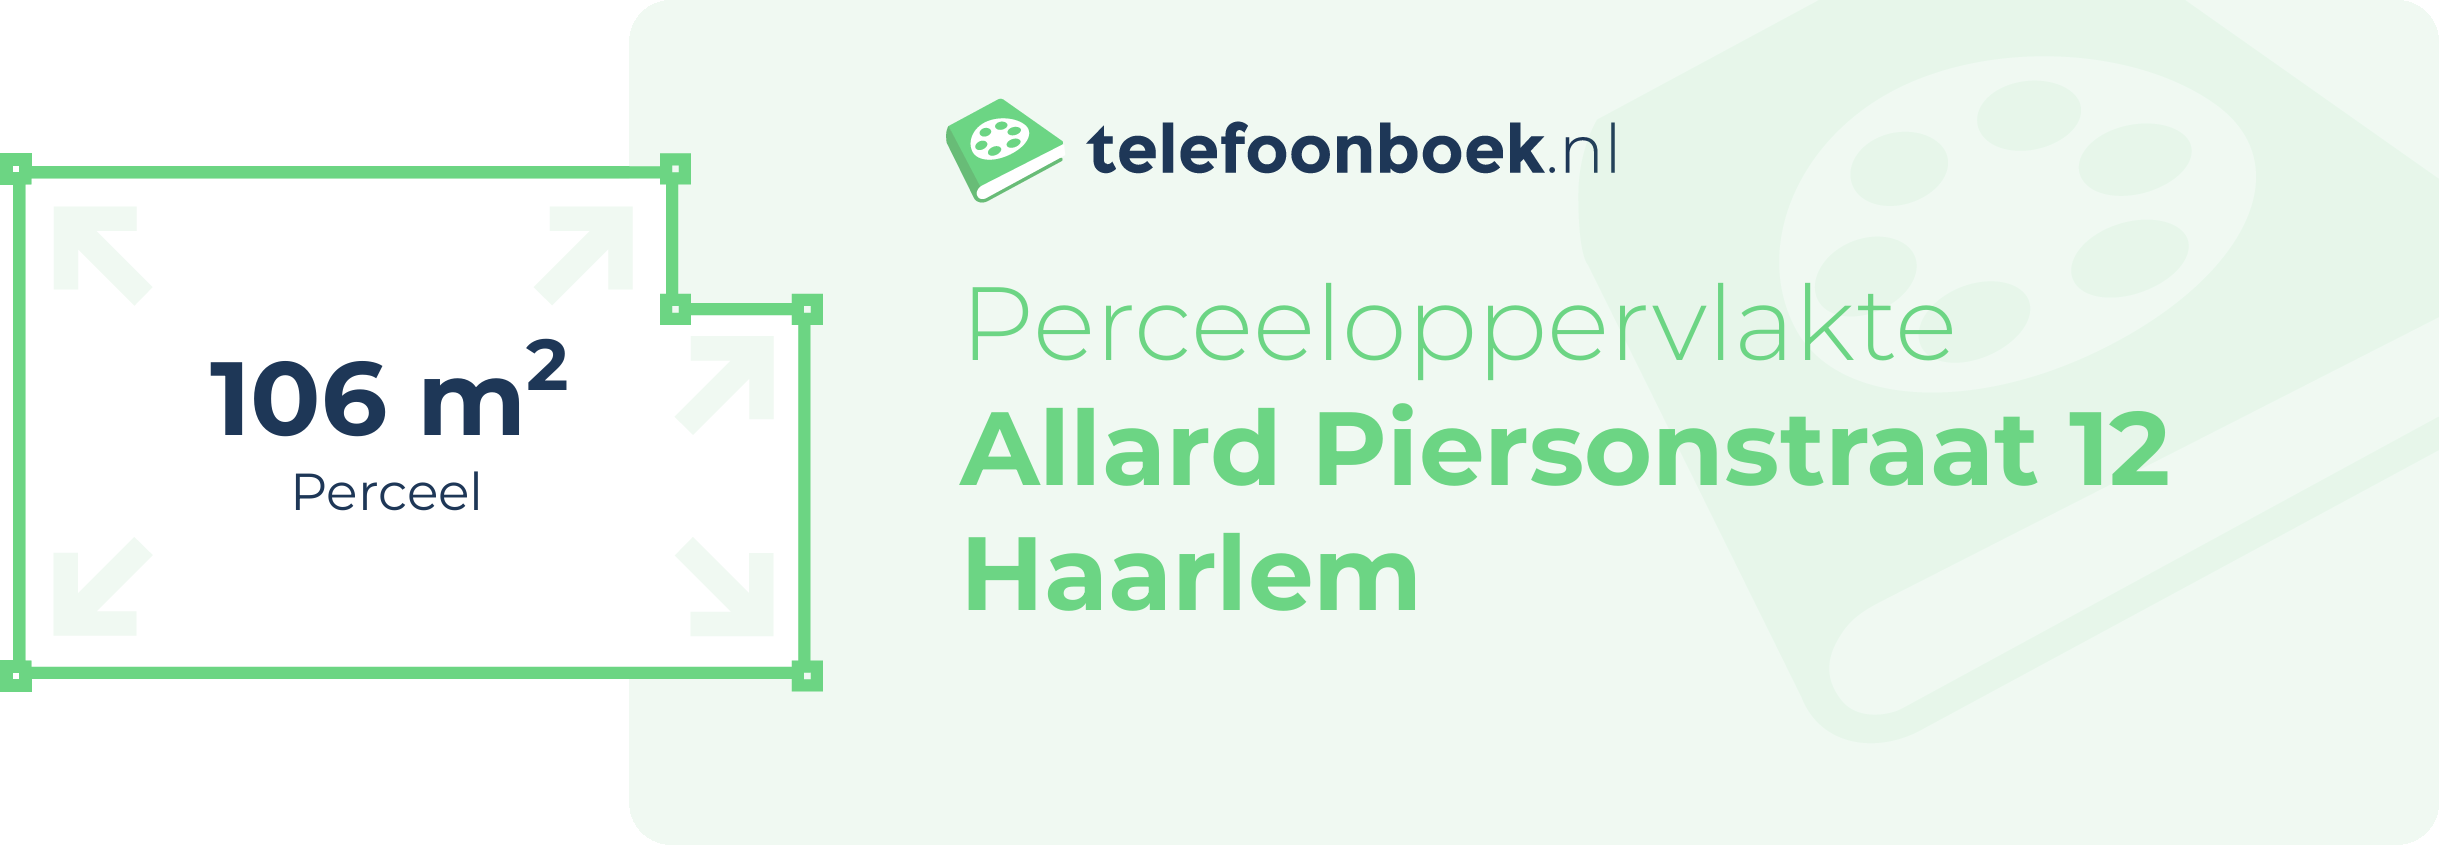 Perceeloppervlakte Allard Piersonstraat 12 Haarlem